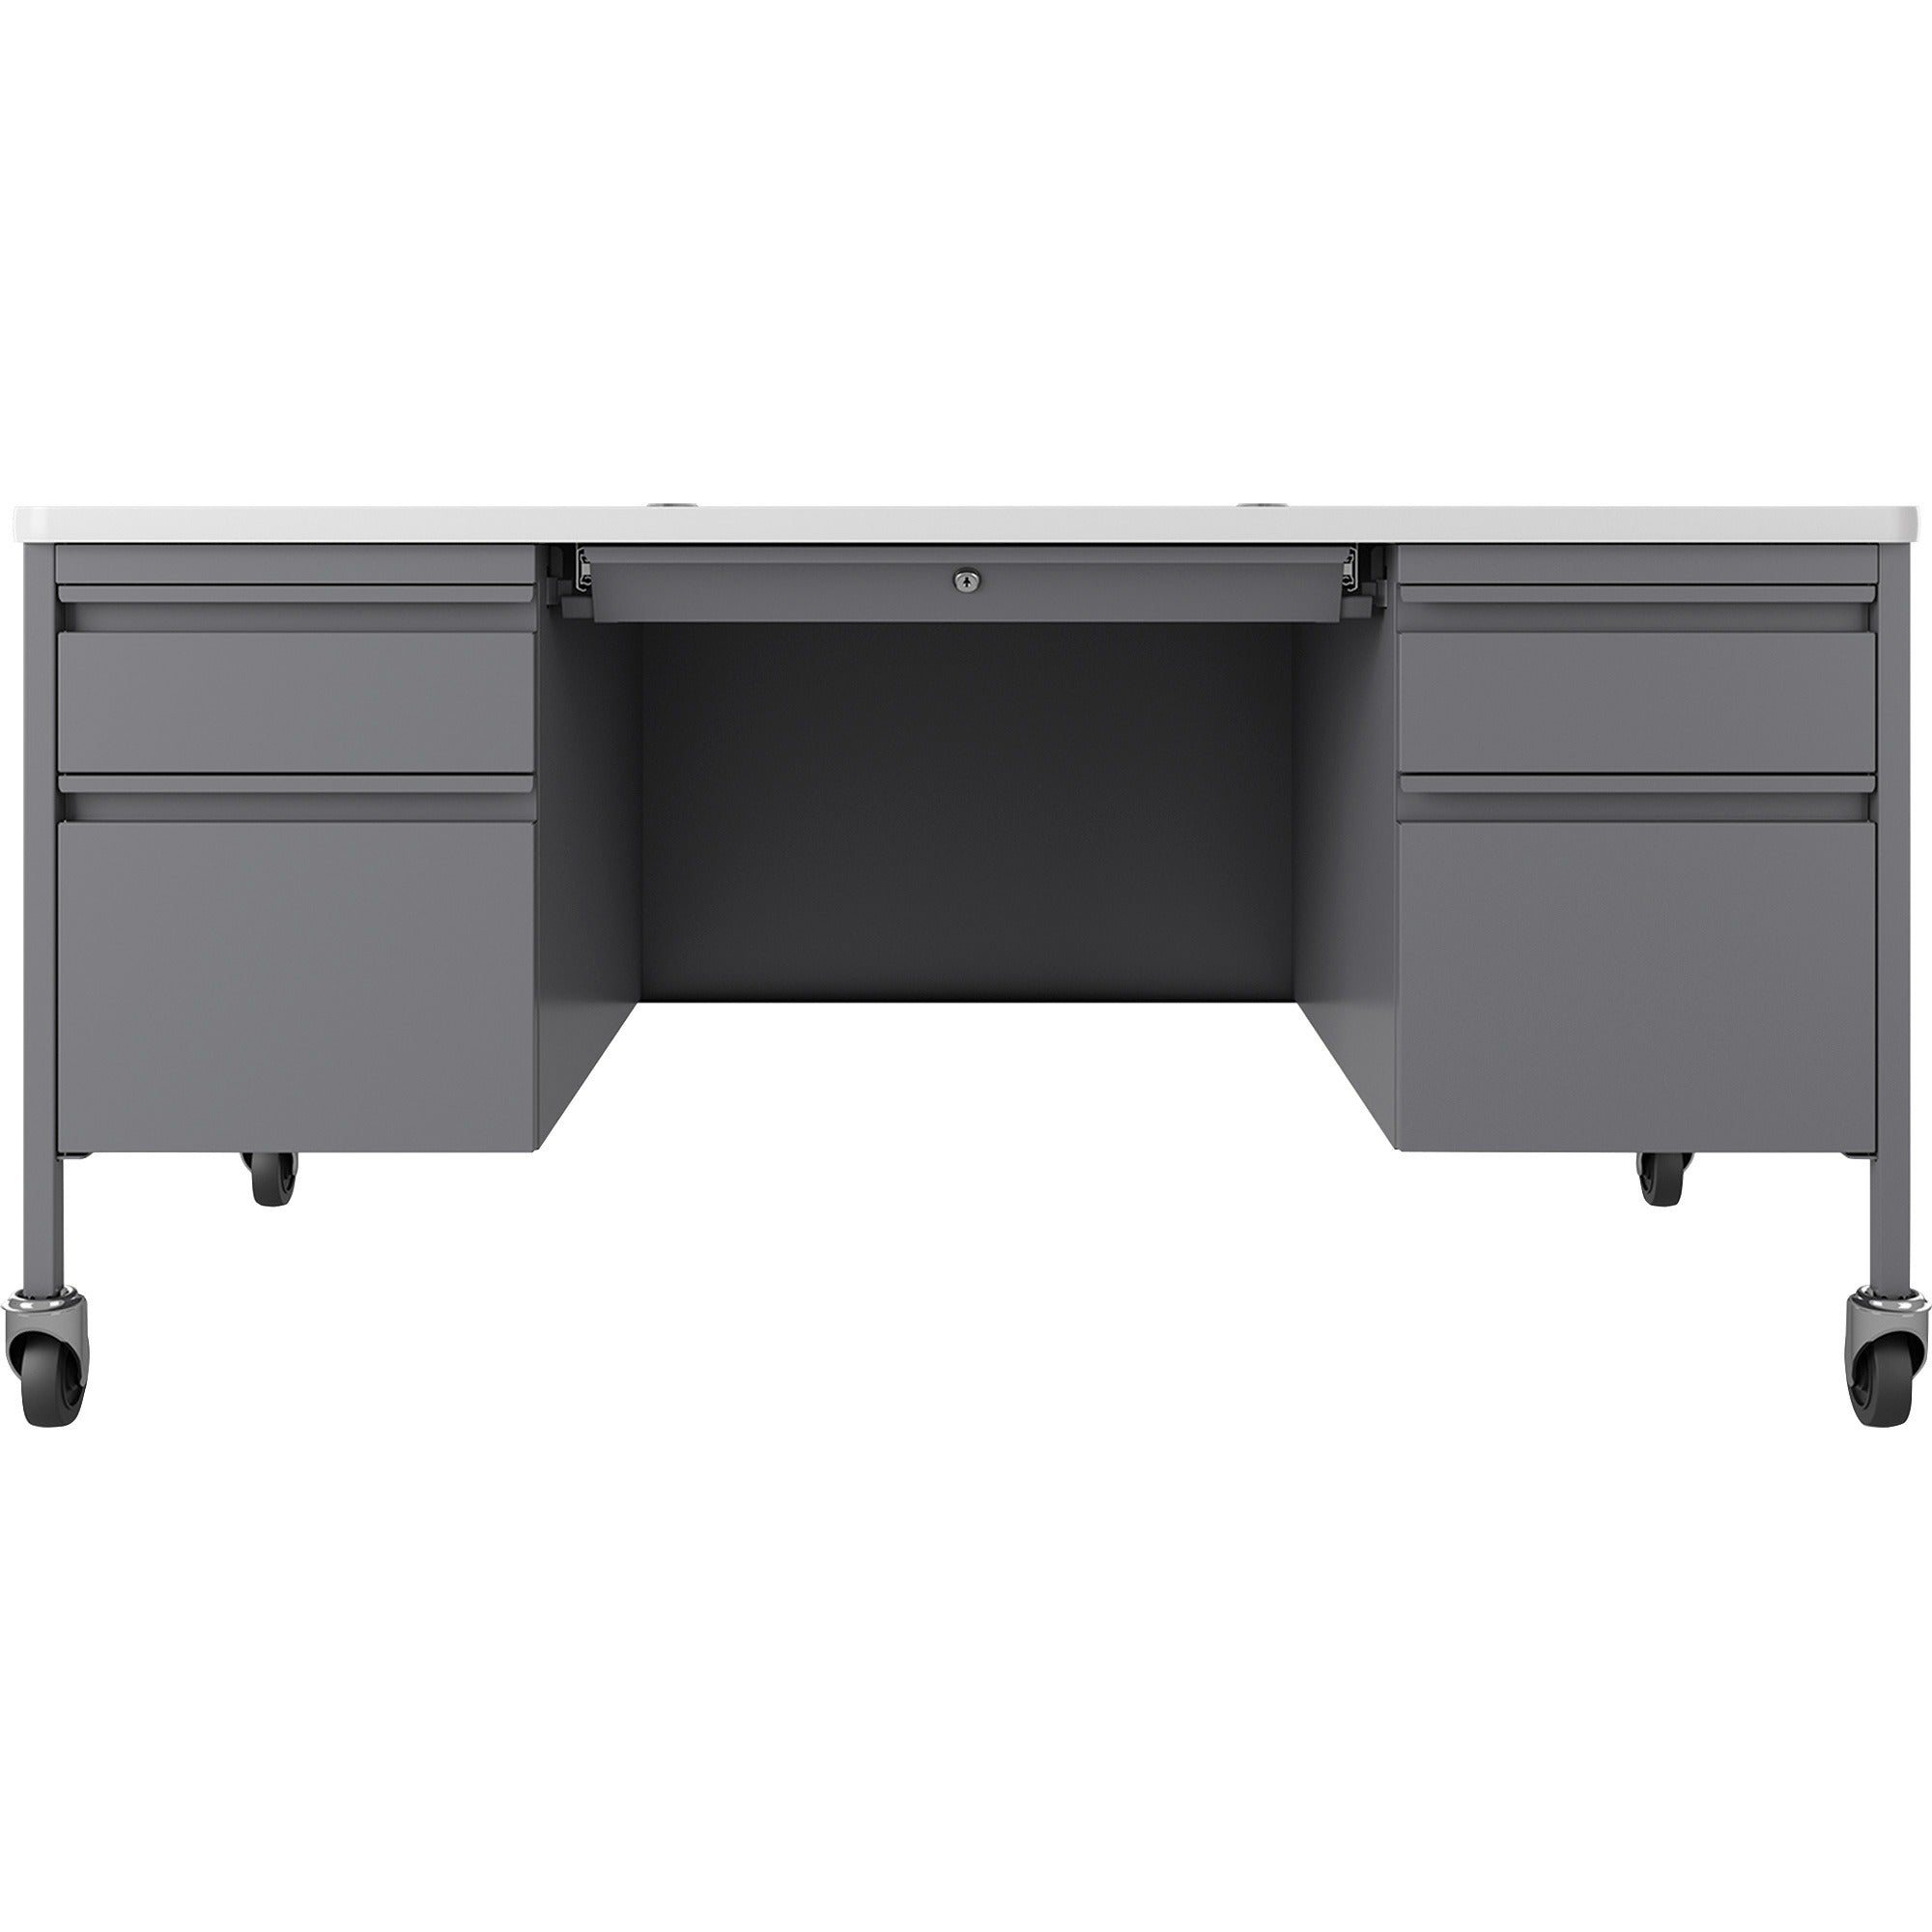 lorell-fortress-series-mobile-double-pedestal-teachers-desk-60-x-30295-box-file-drawers-double-pedestal-t-mold-edge-finish-gray_llr66946 - 2